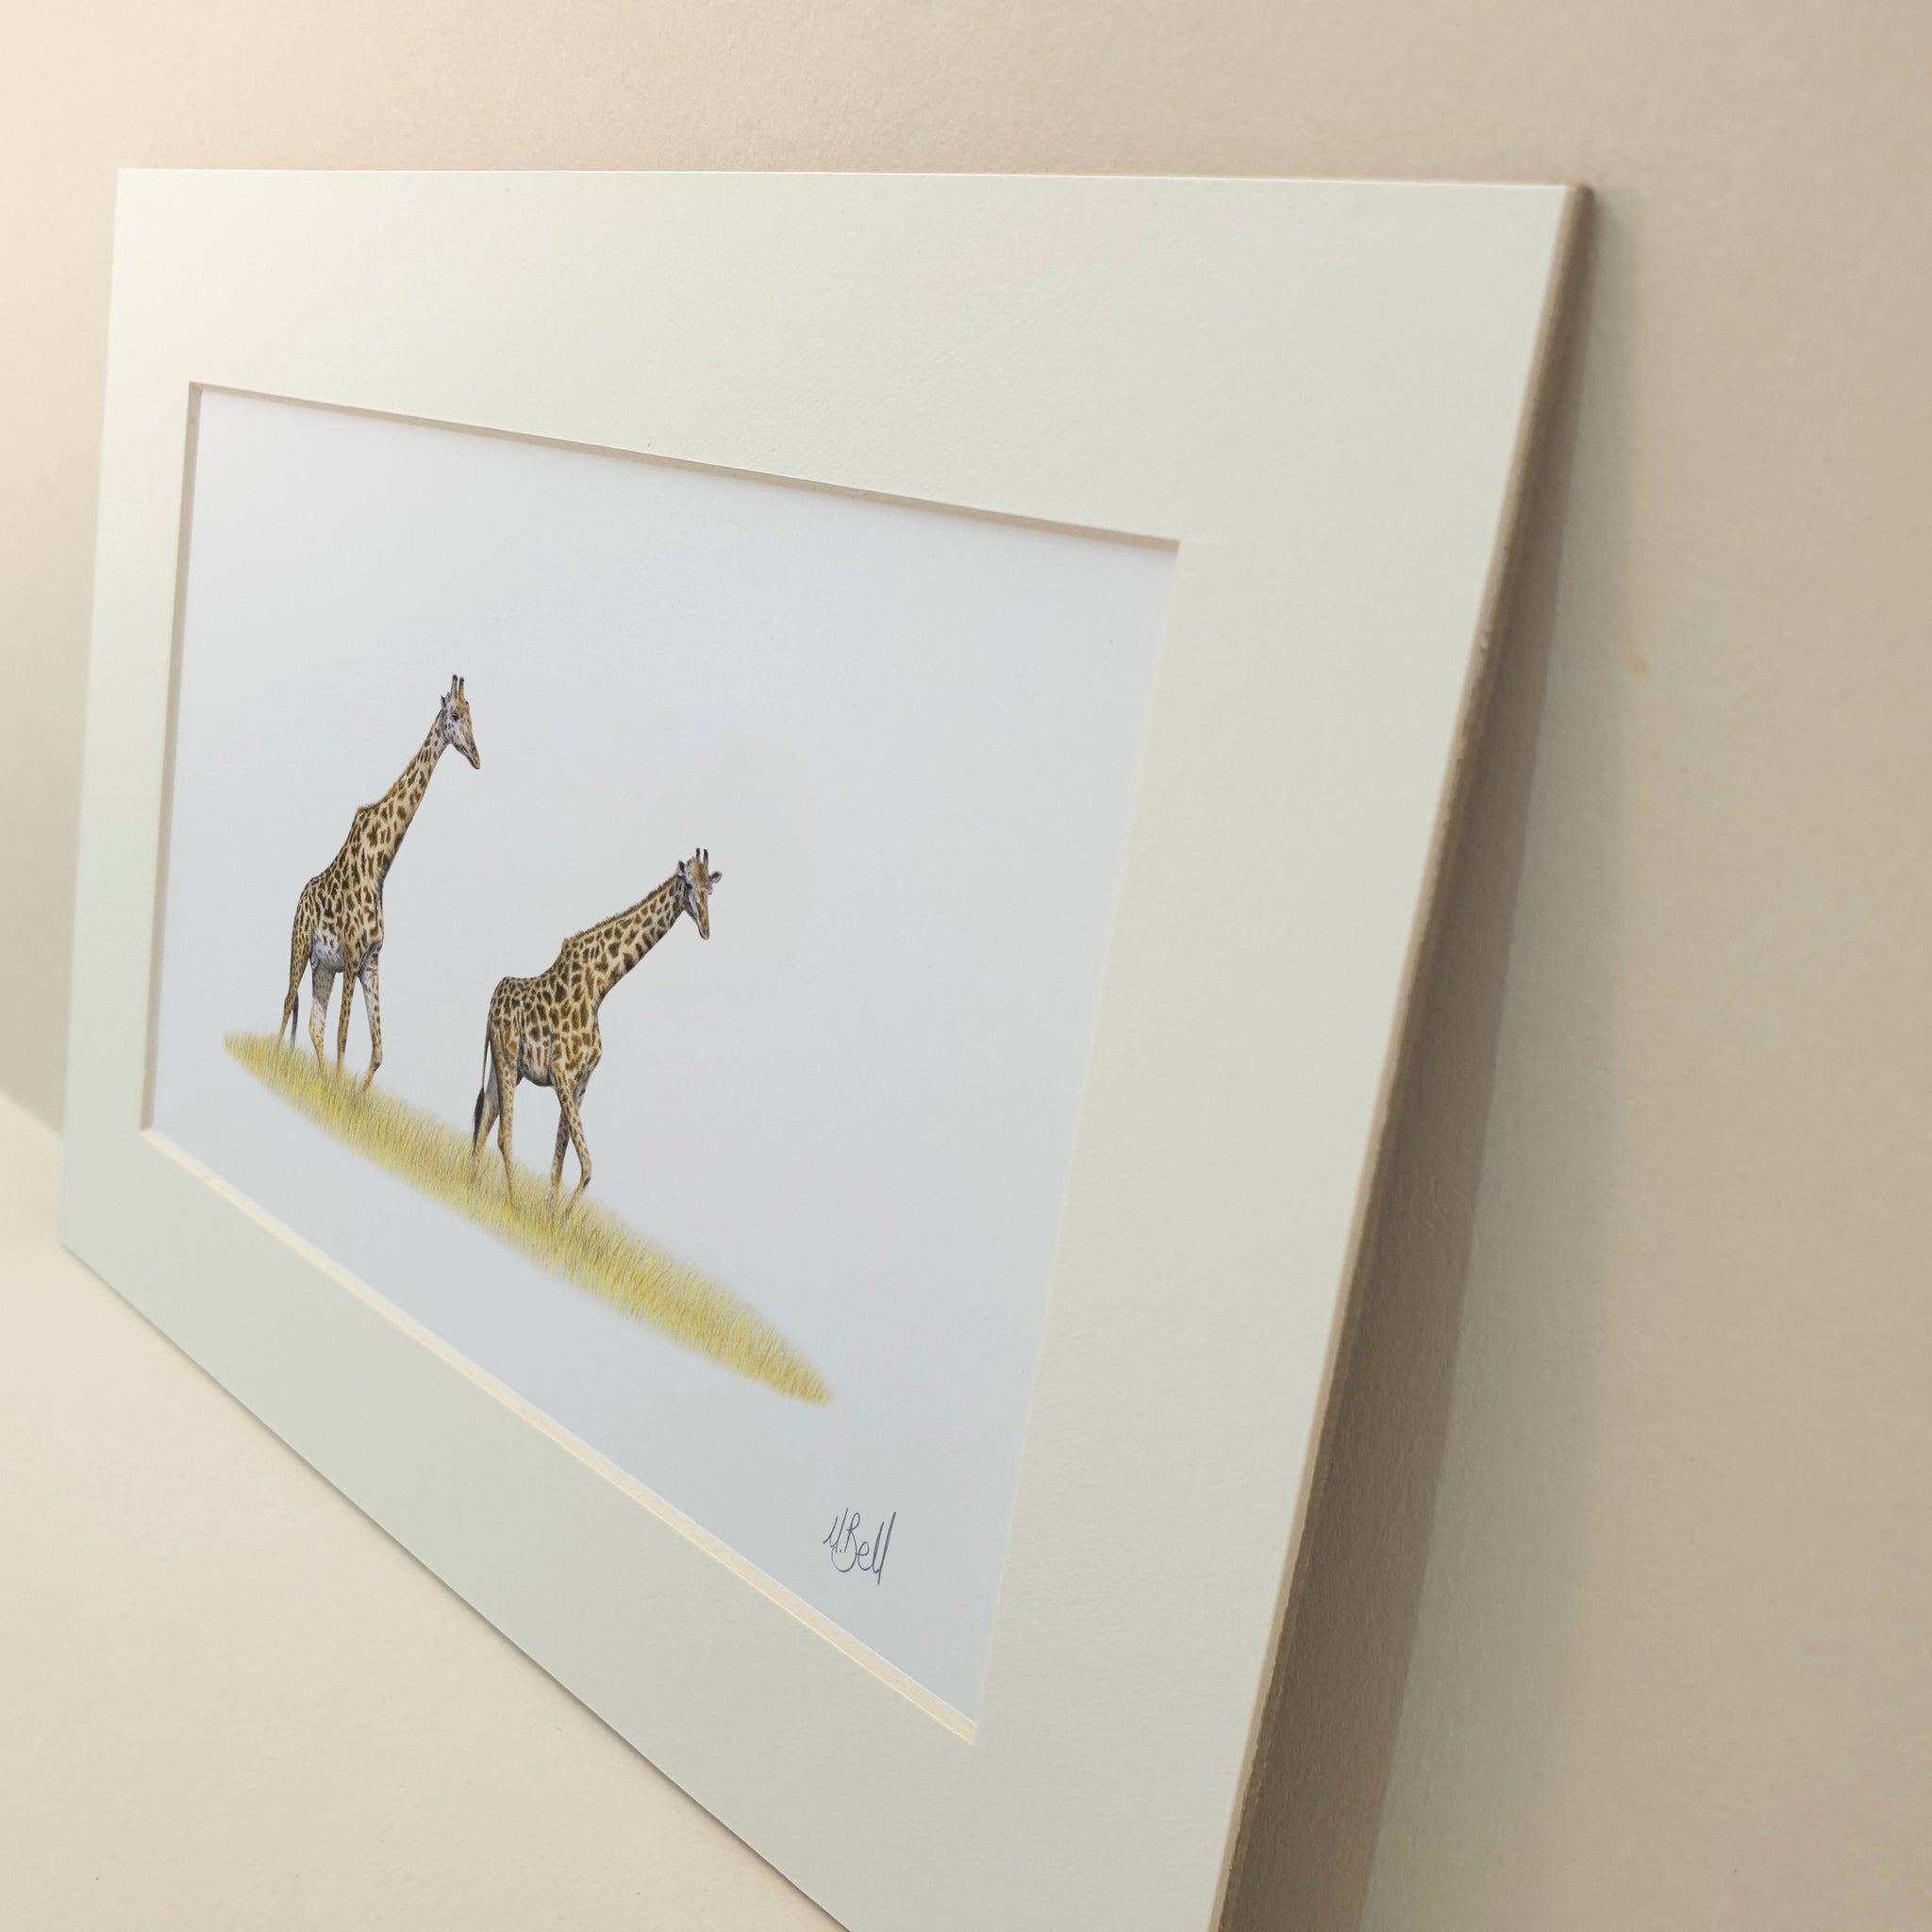 Artwork of a pair of giraffes in the Serengeti savanna by artist Matthew Bell